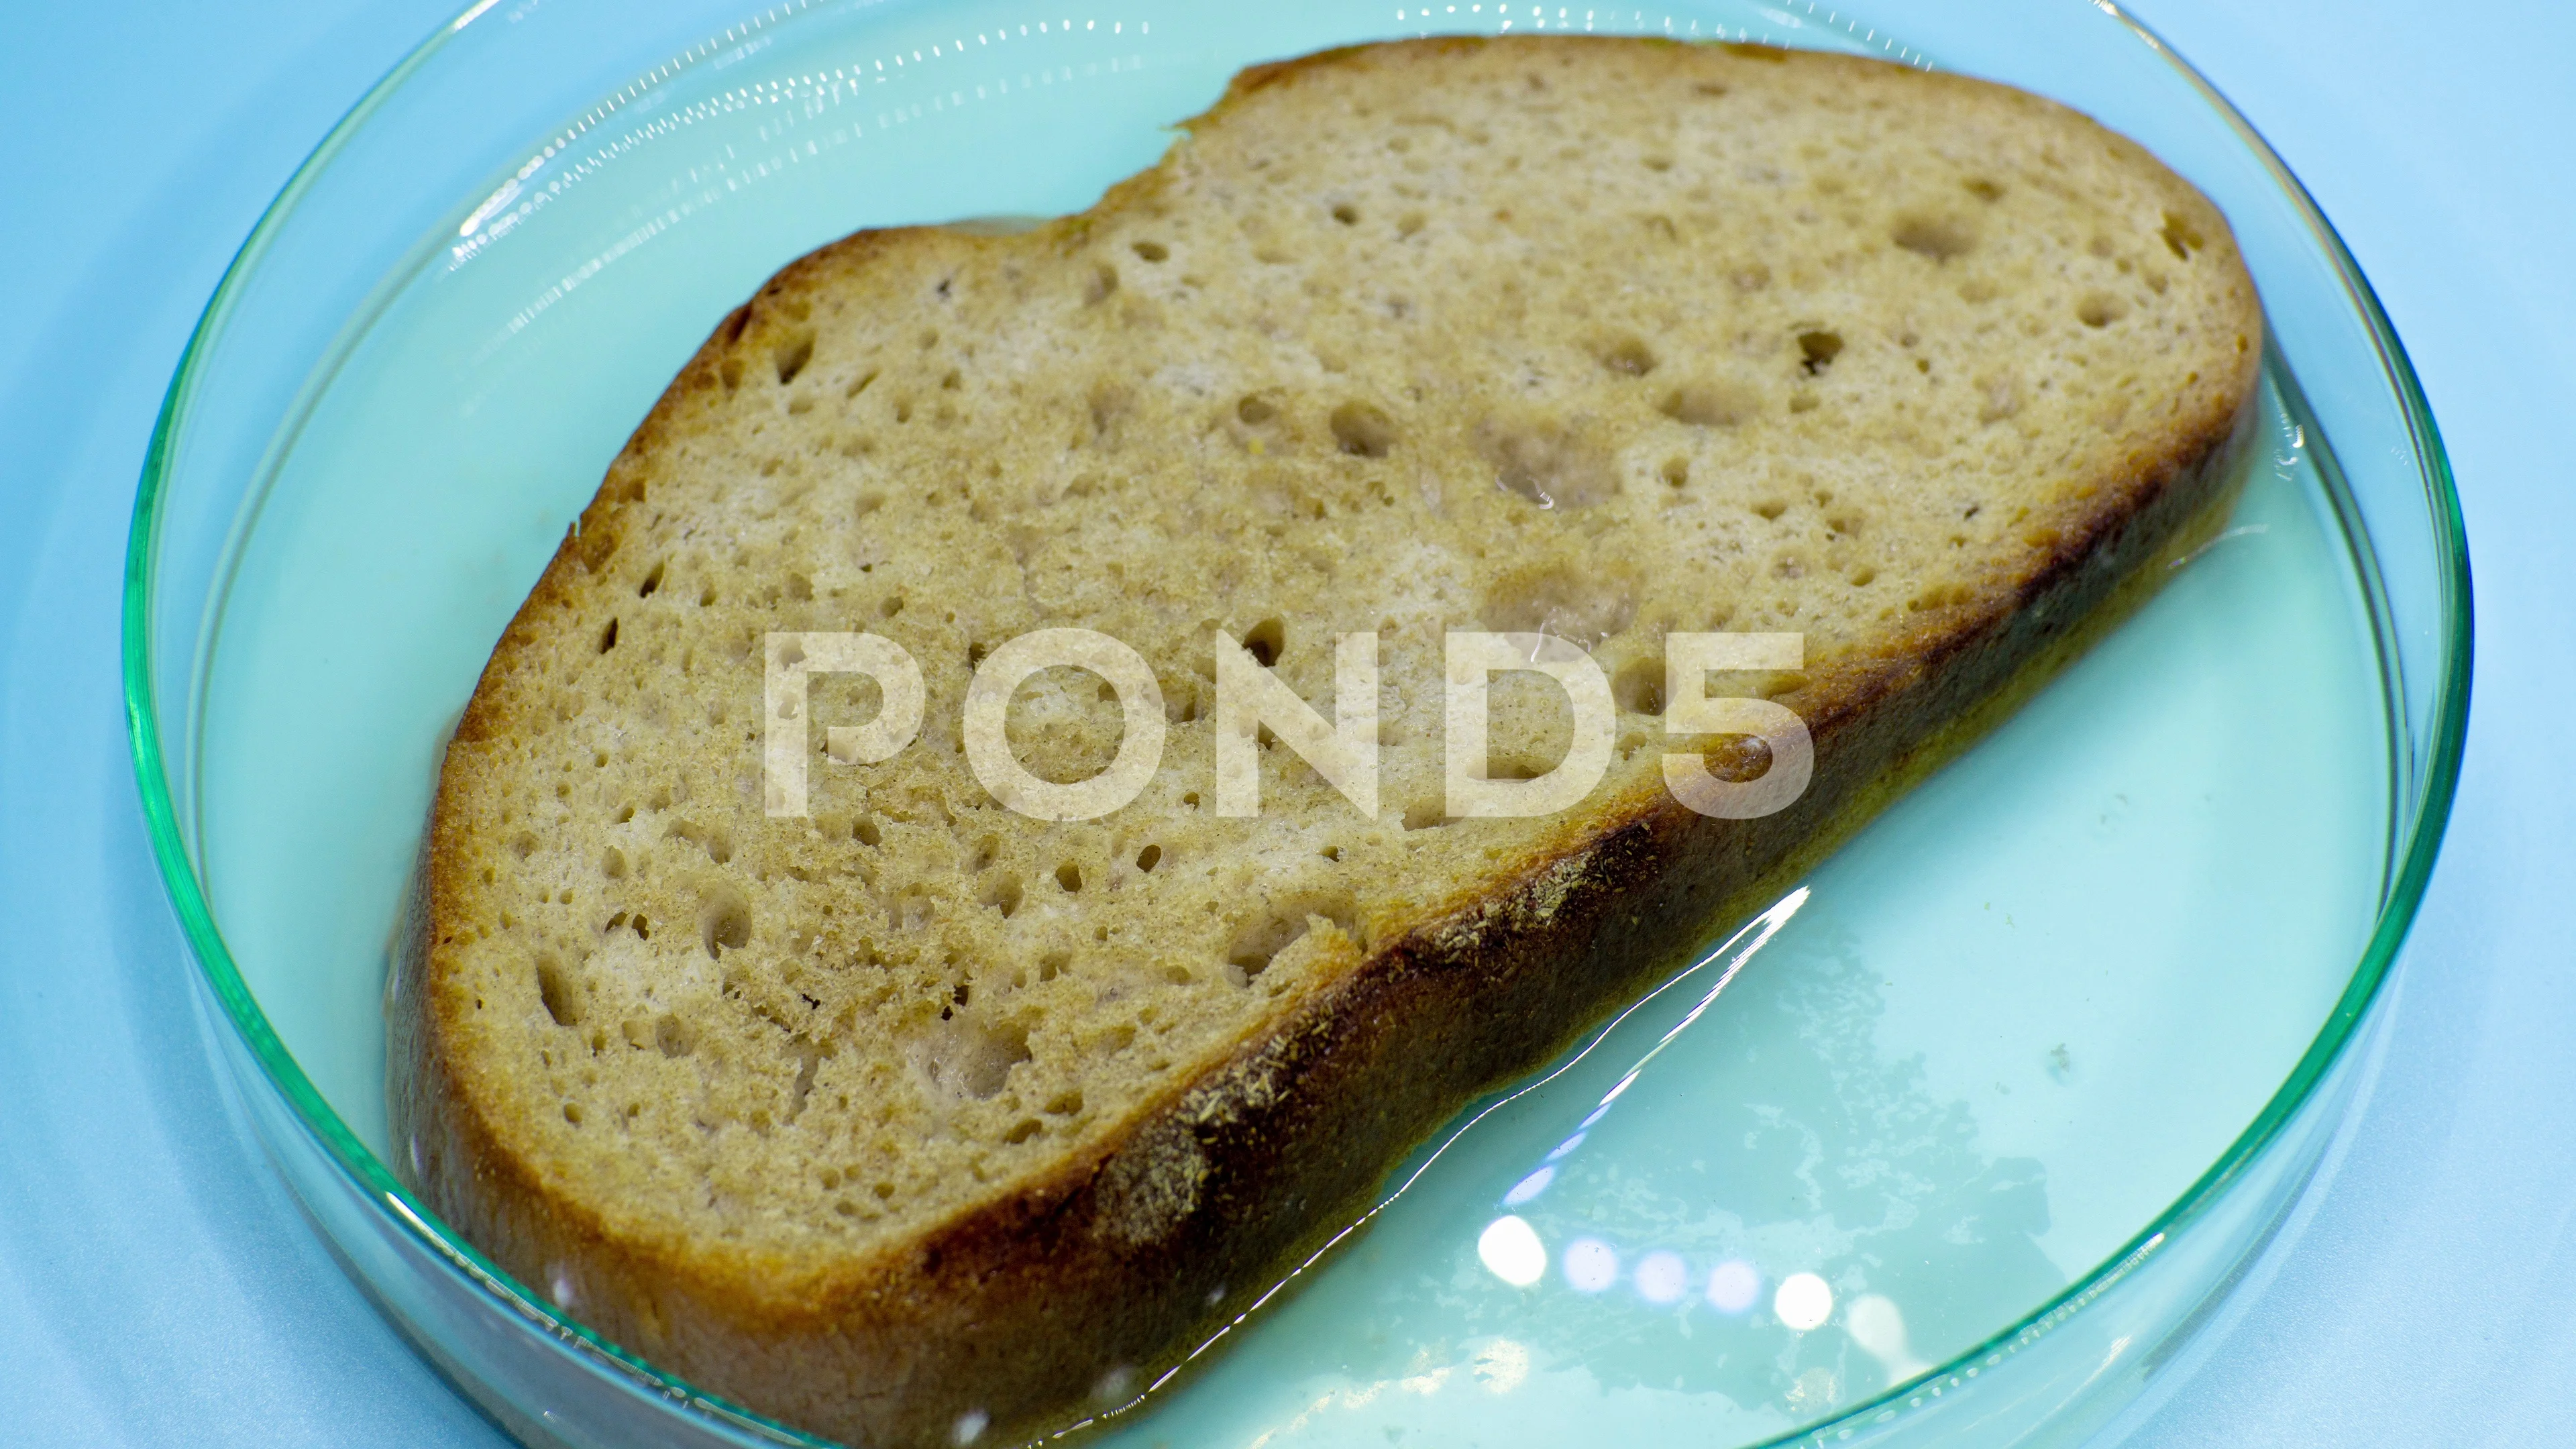 https://images.pond5.com/bread-mold-time-lapse-bread-footage-112004868_prevstill.jpeg